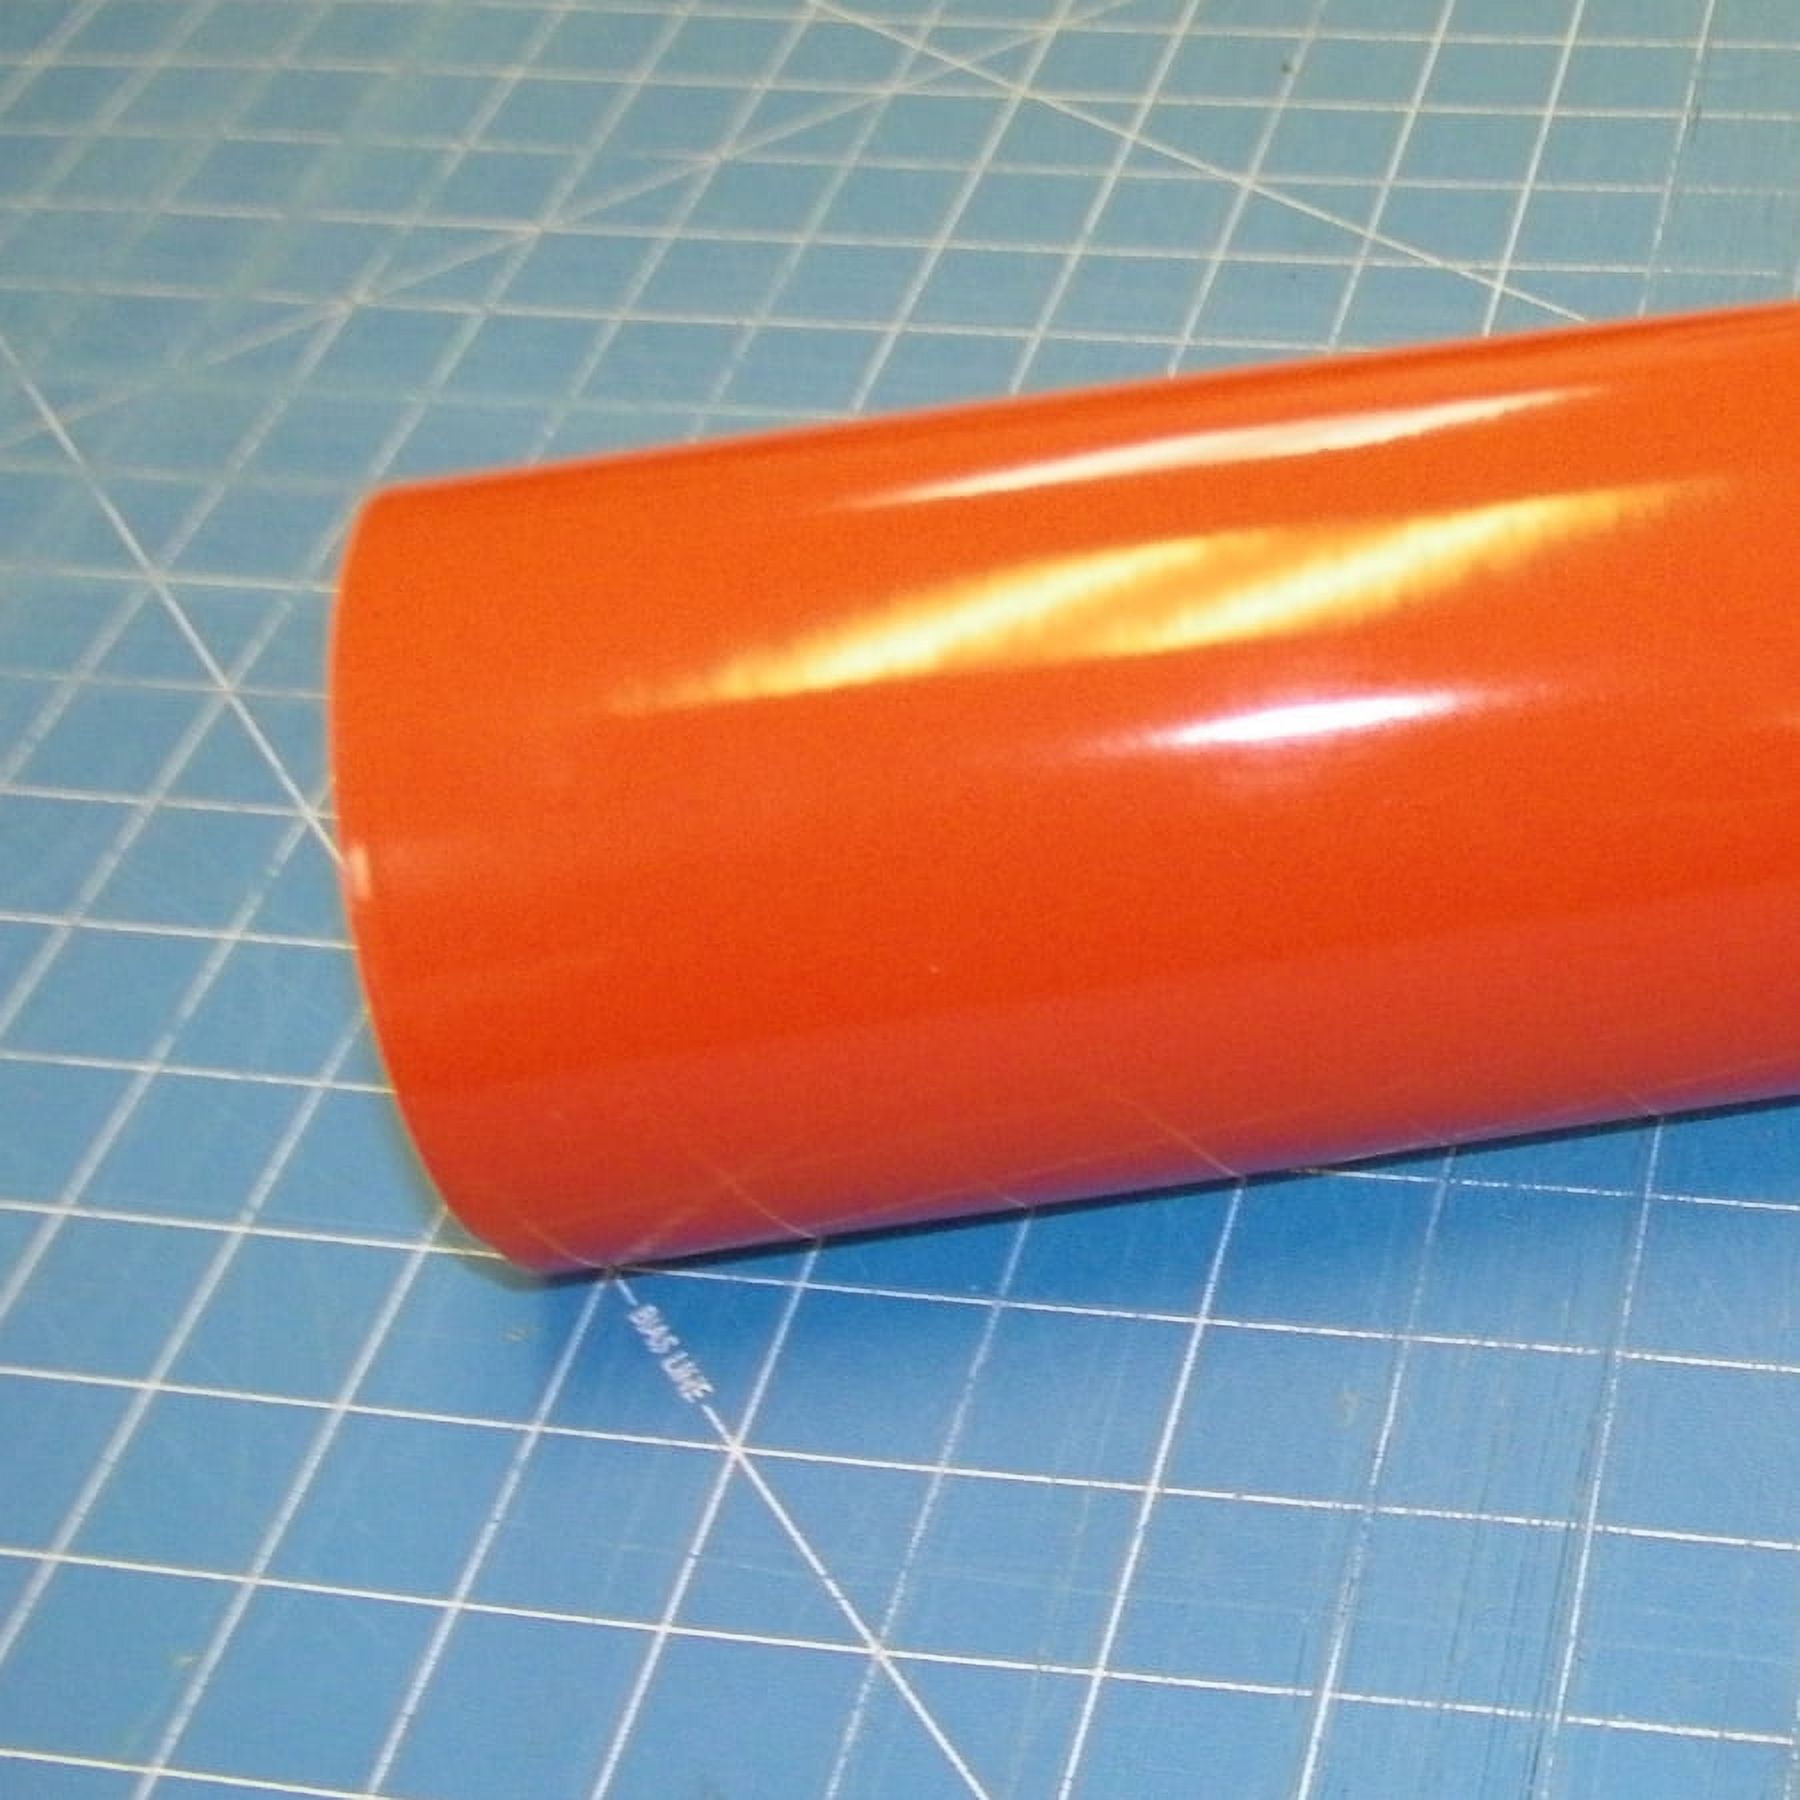 HTVRONT Orange Red Heat Transfer Vinyl Rolls-12 x 10FT Orange Red